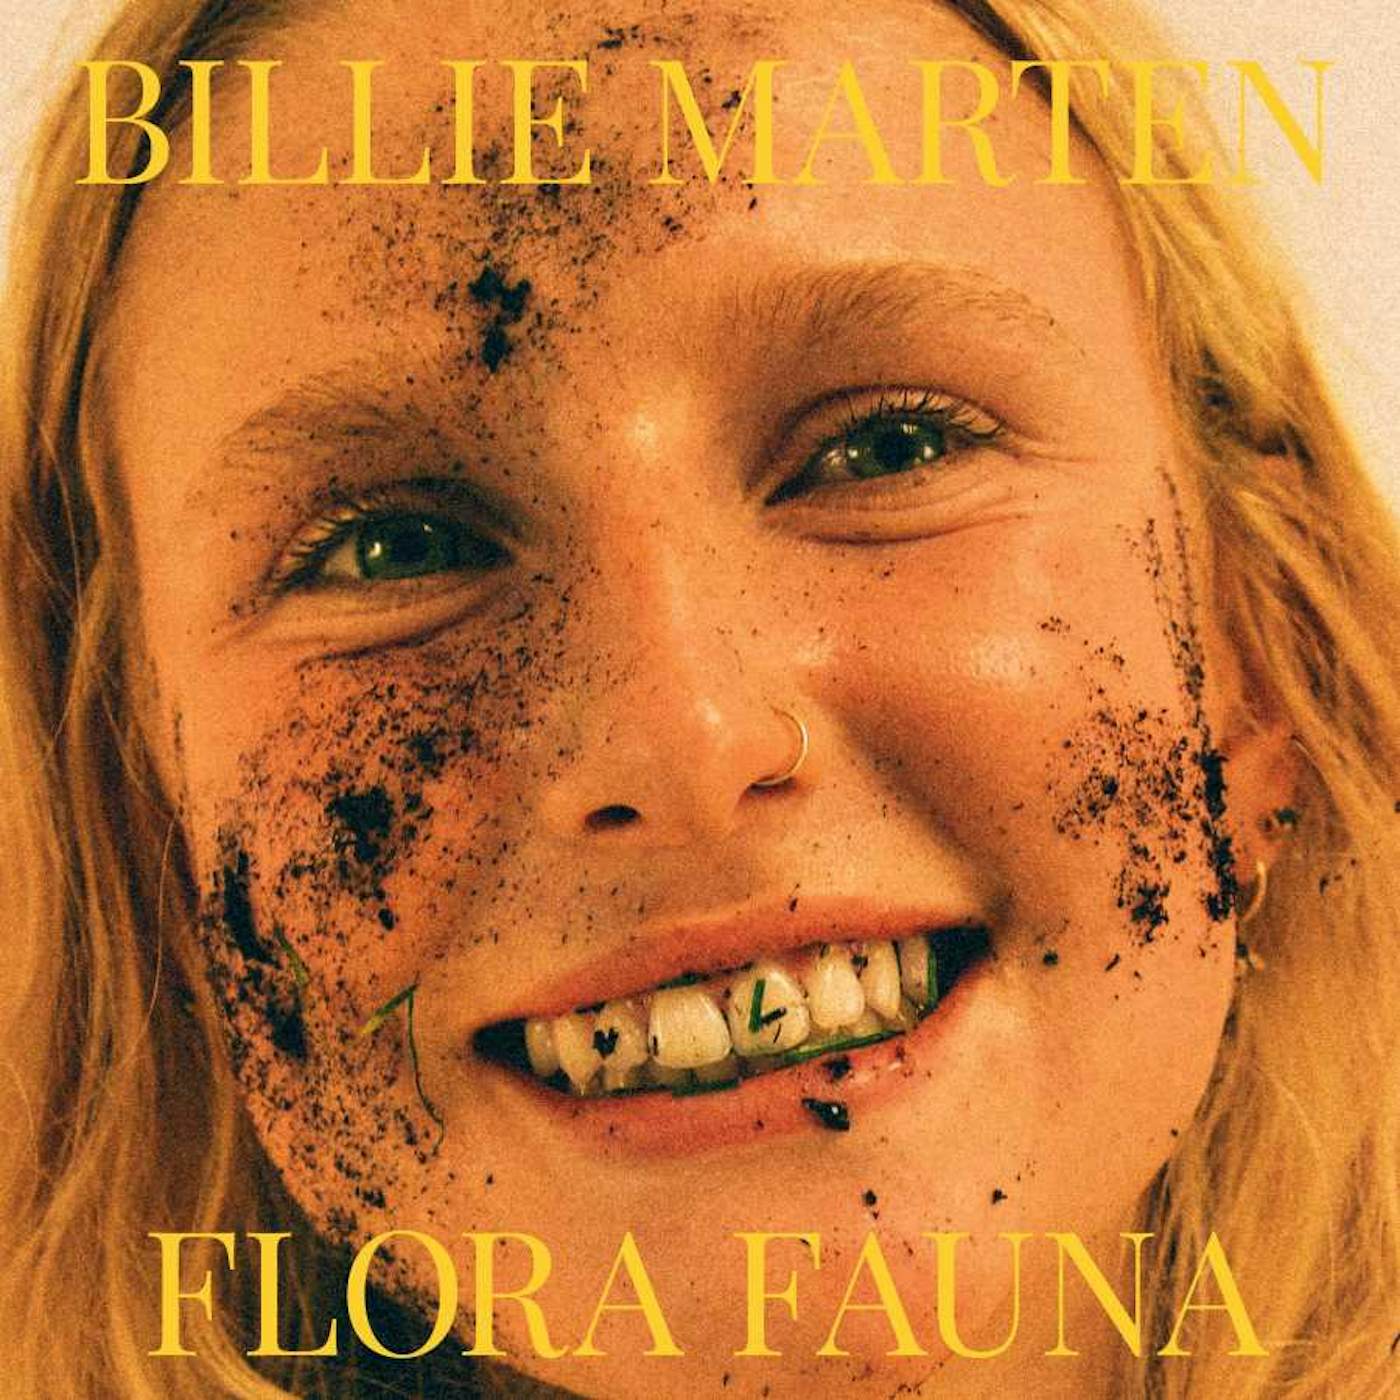 Billie Marten Flora Fauna (LP) Vinyl Record